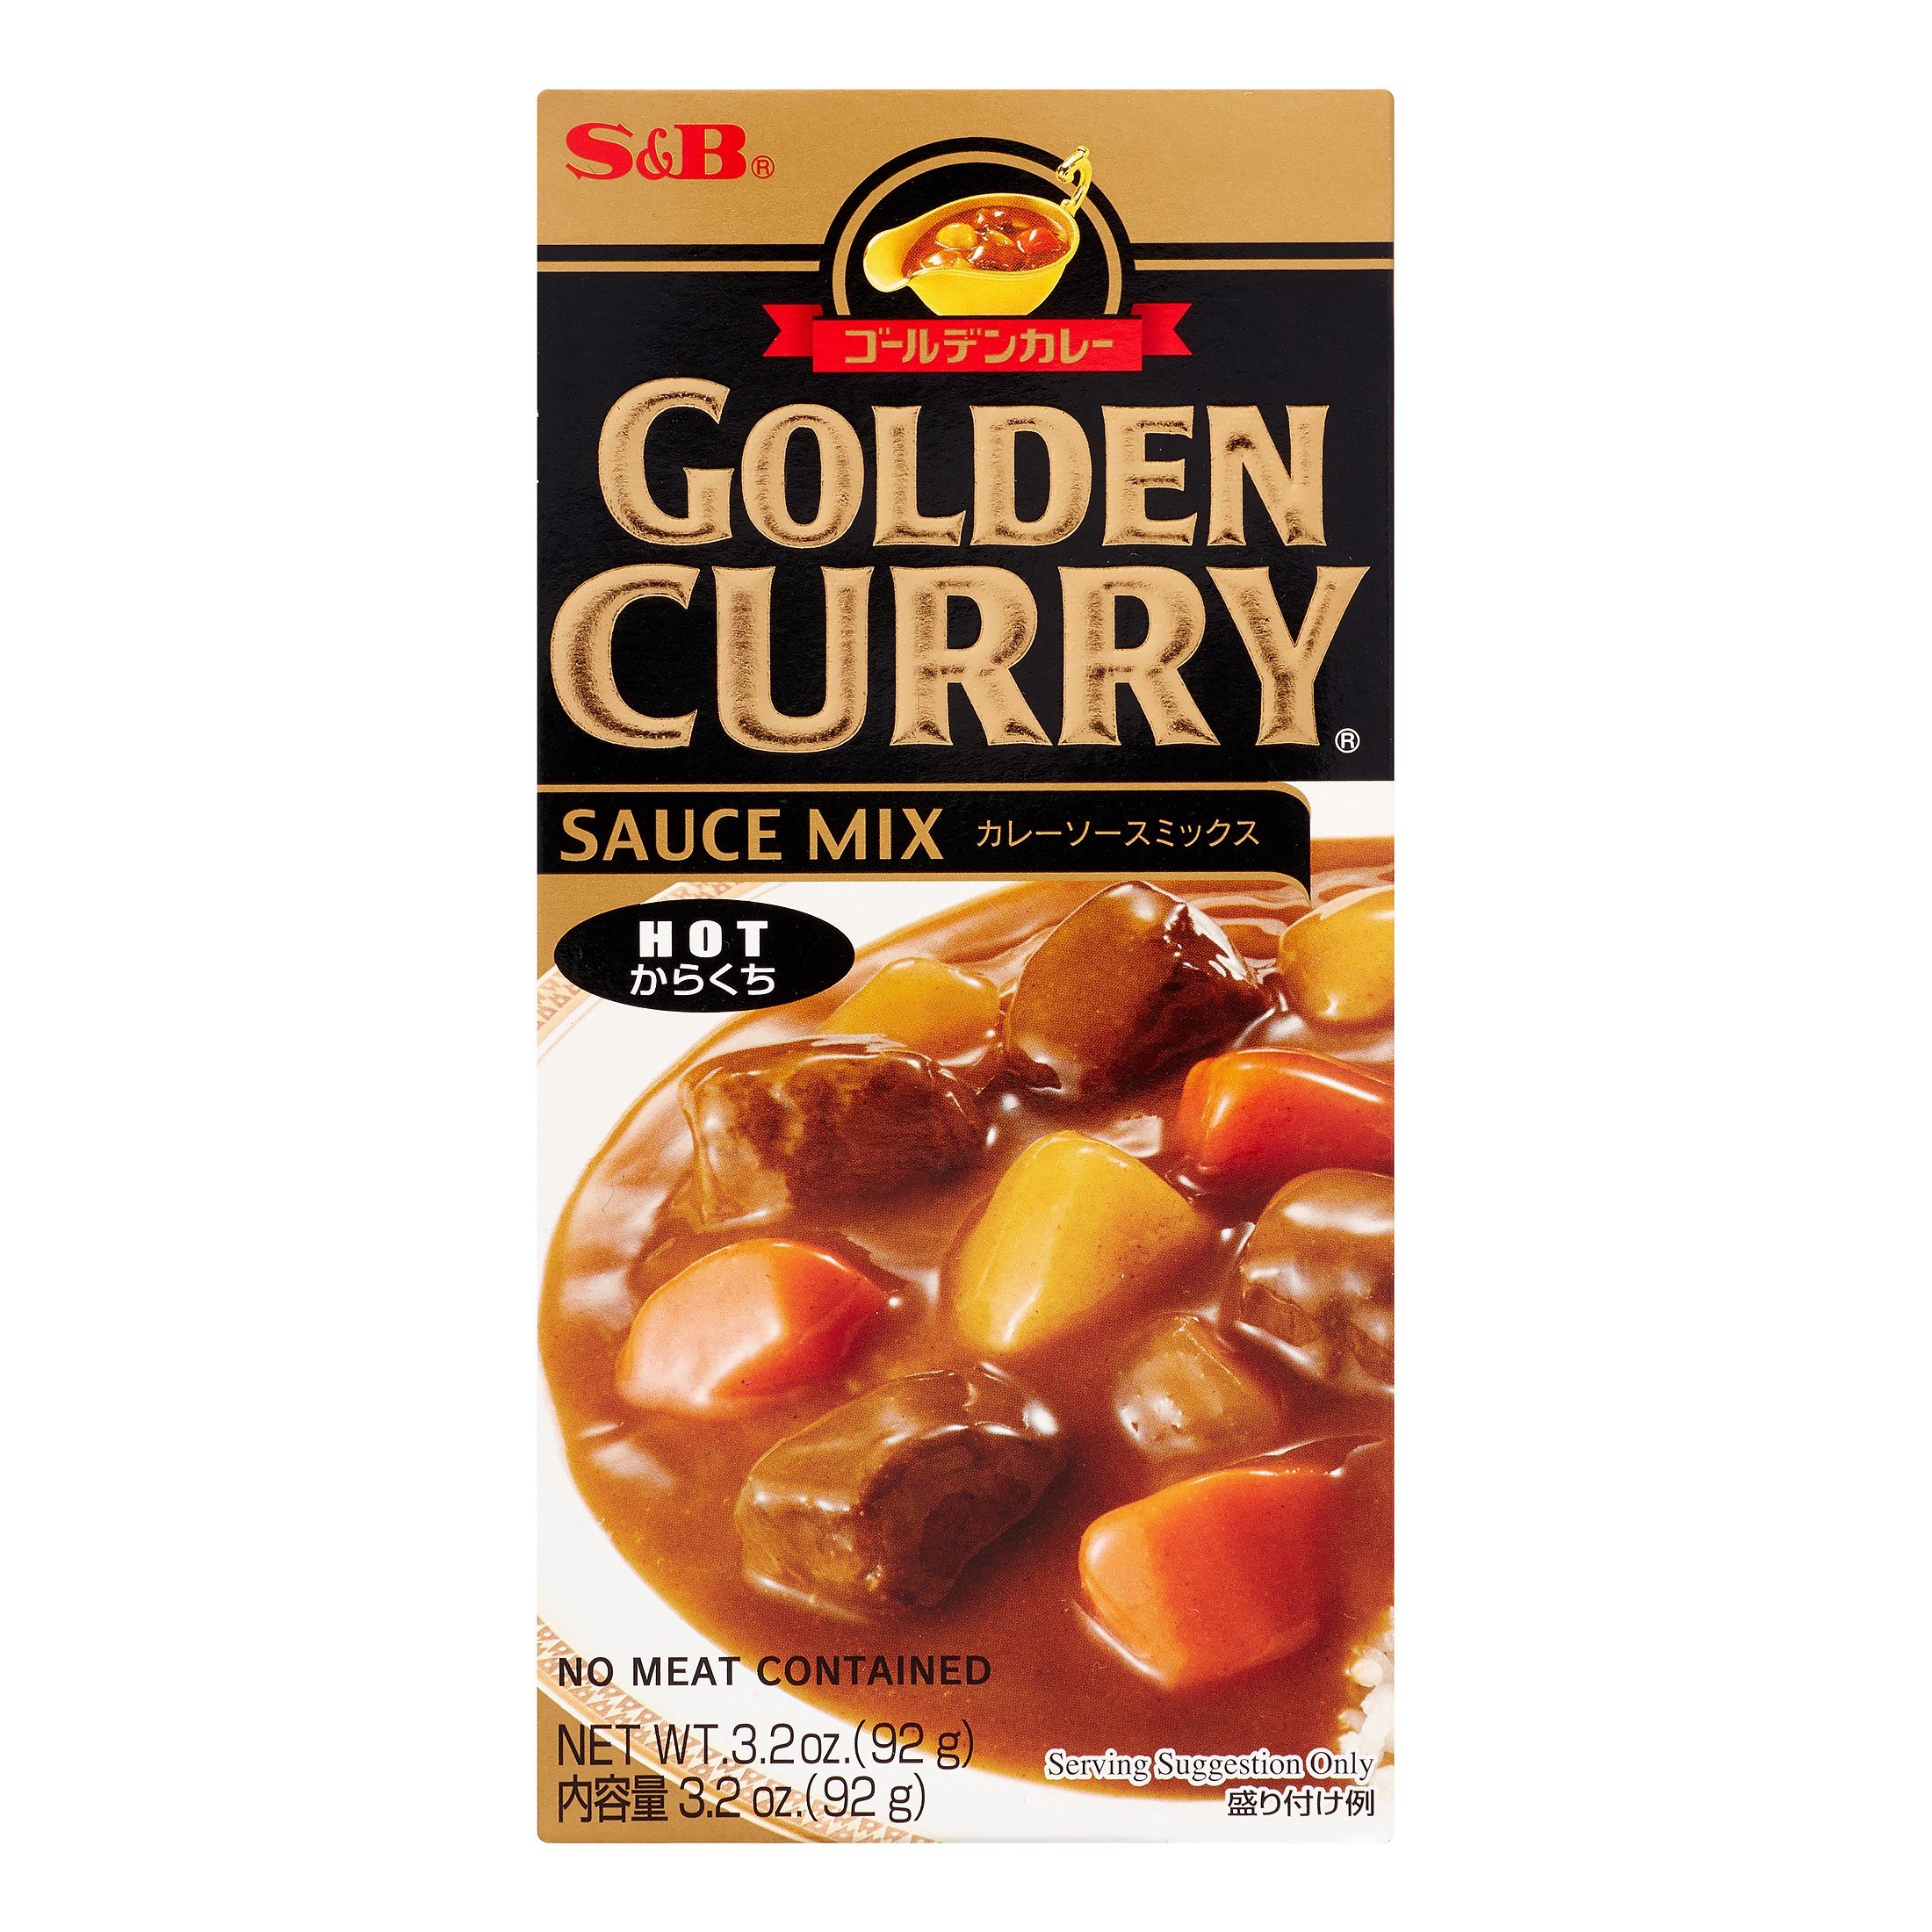 S& B Golden Curry Sauce Mix, Hot, 3.2 Oz